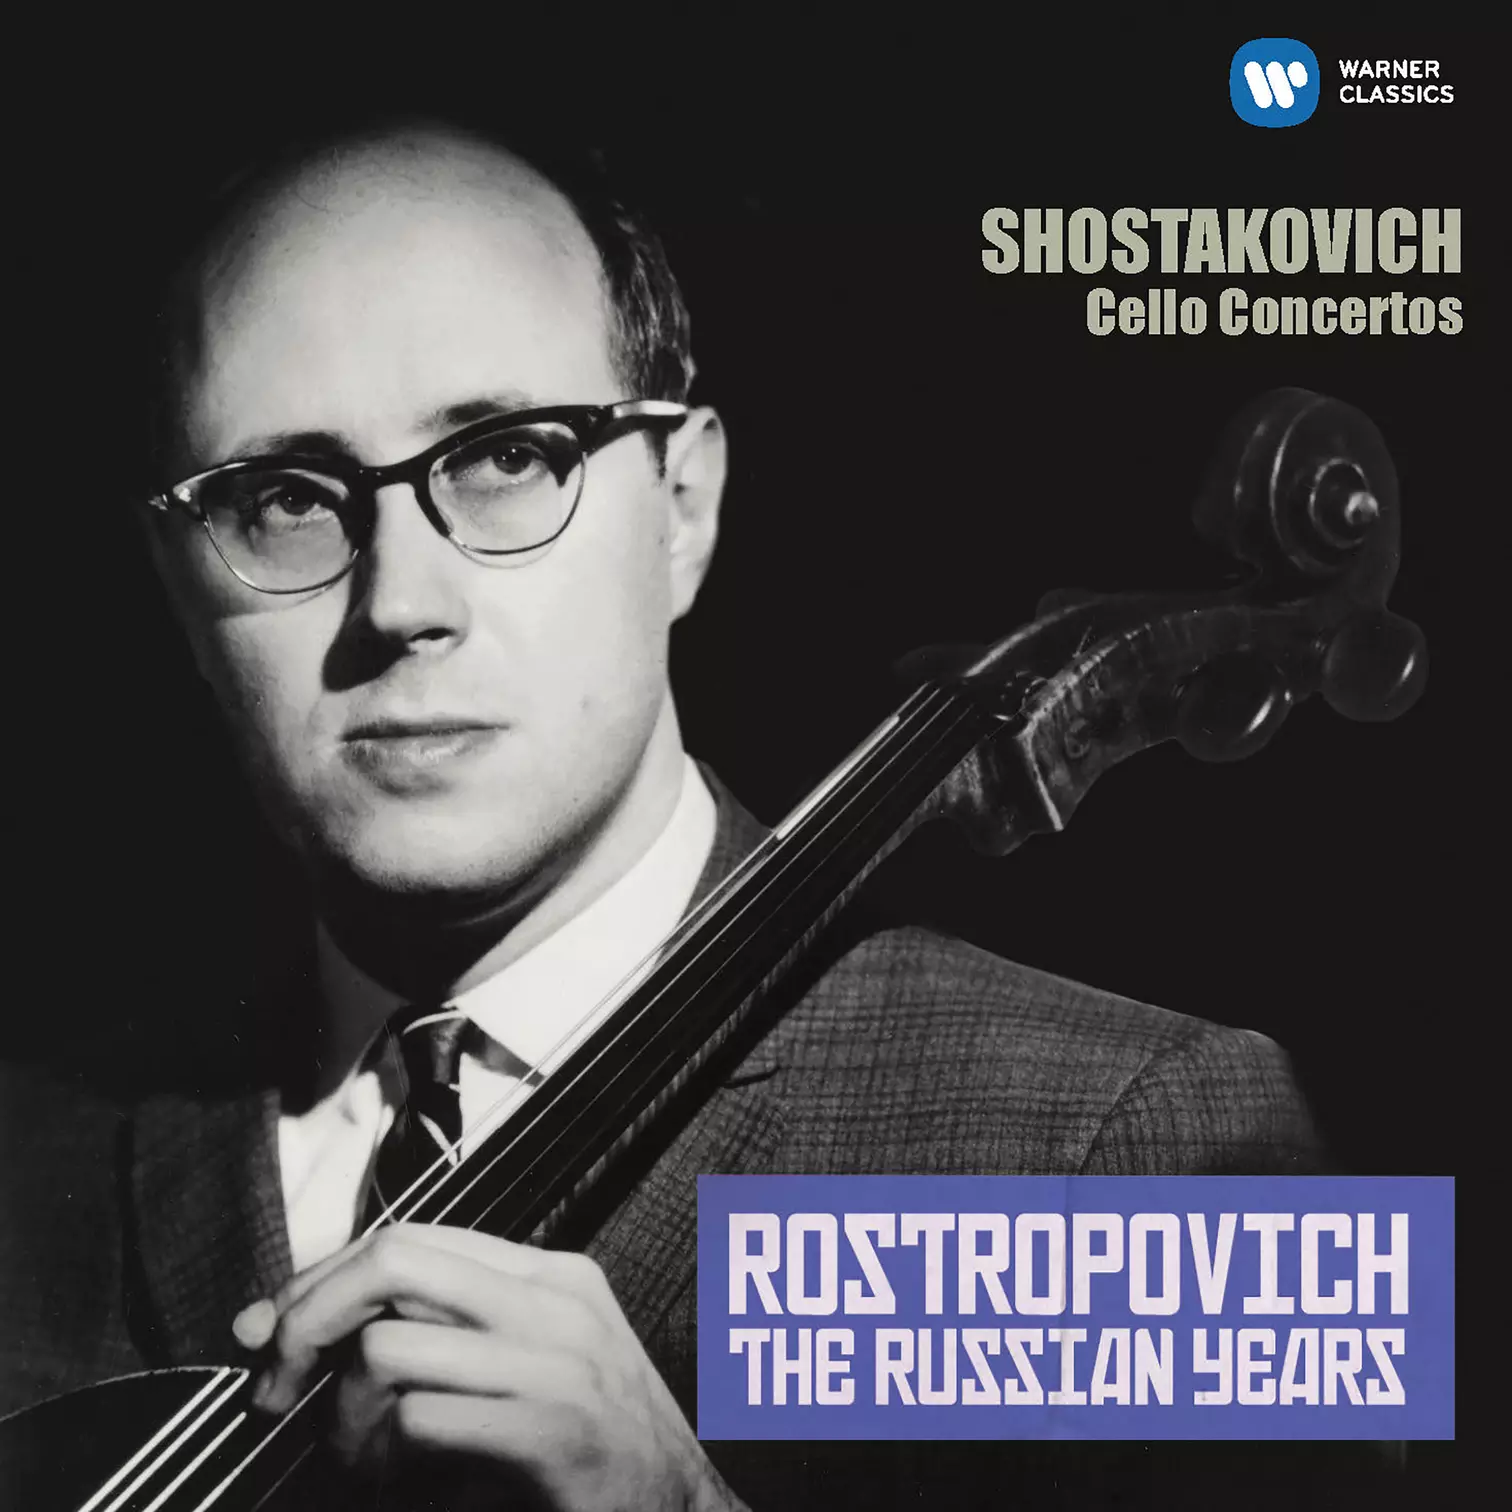 Shostakovich: Cello Concertos (The Russian Years)